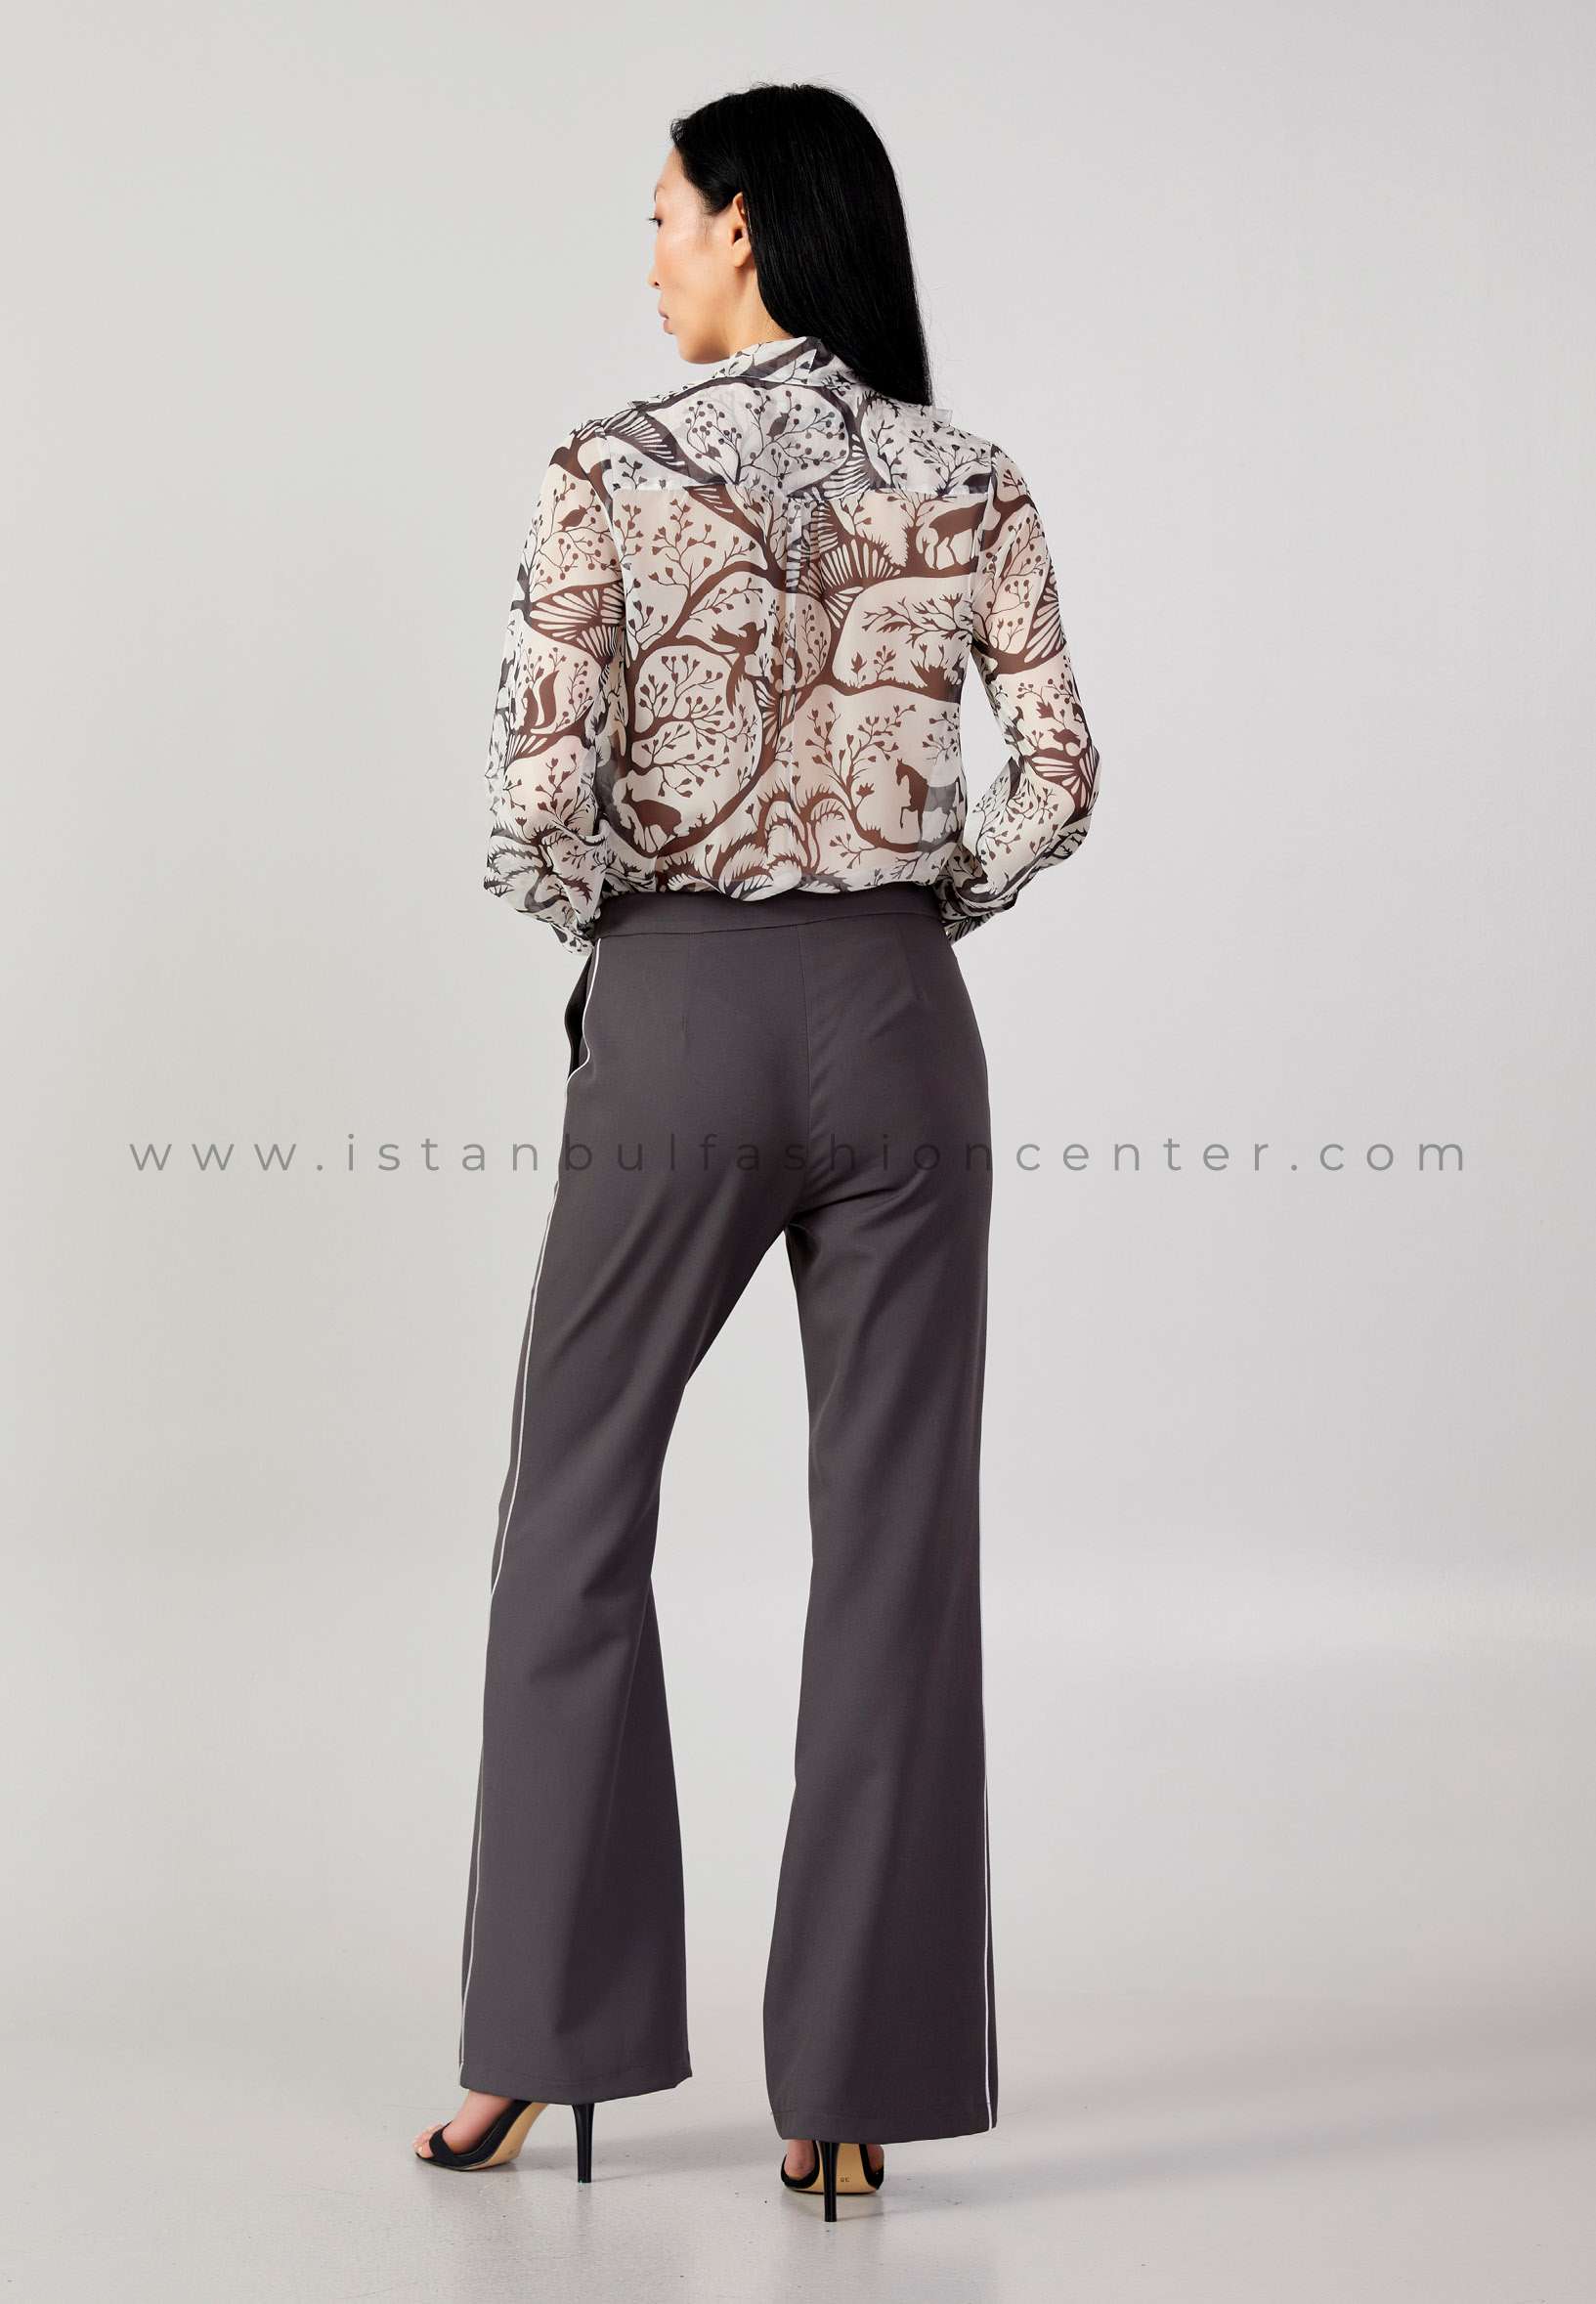 Buy MANCREW Formal Pants for Men Regular fit - Formal Trousers for Men -  Black at Amazon.in